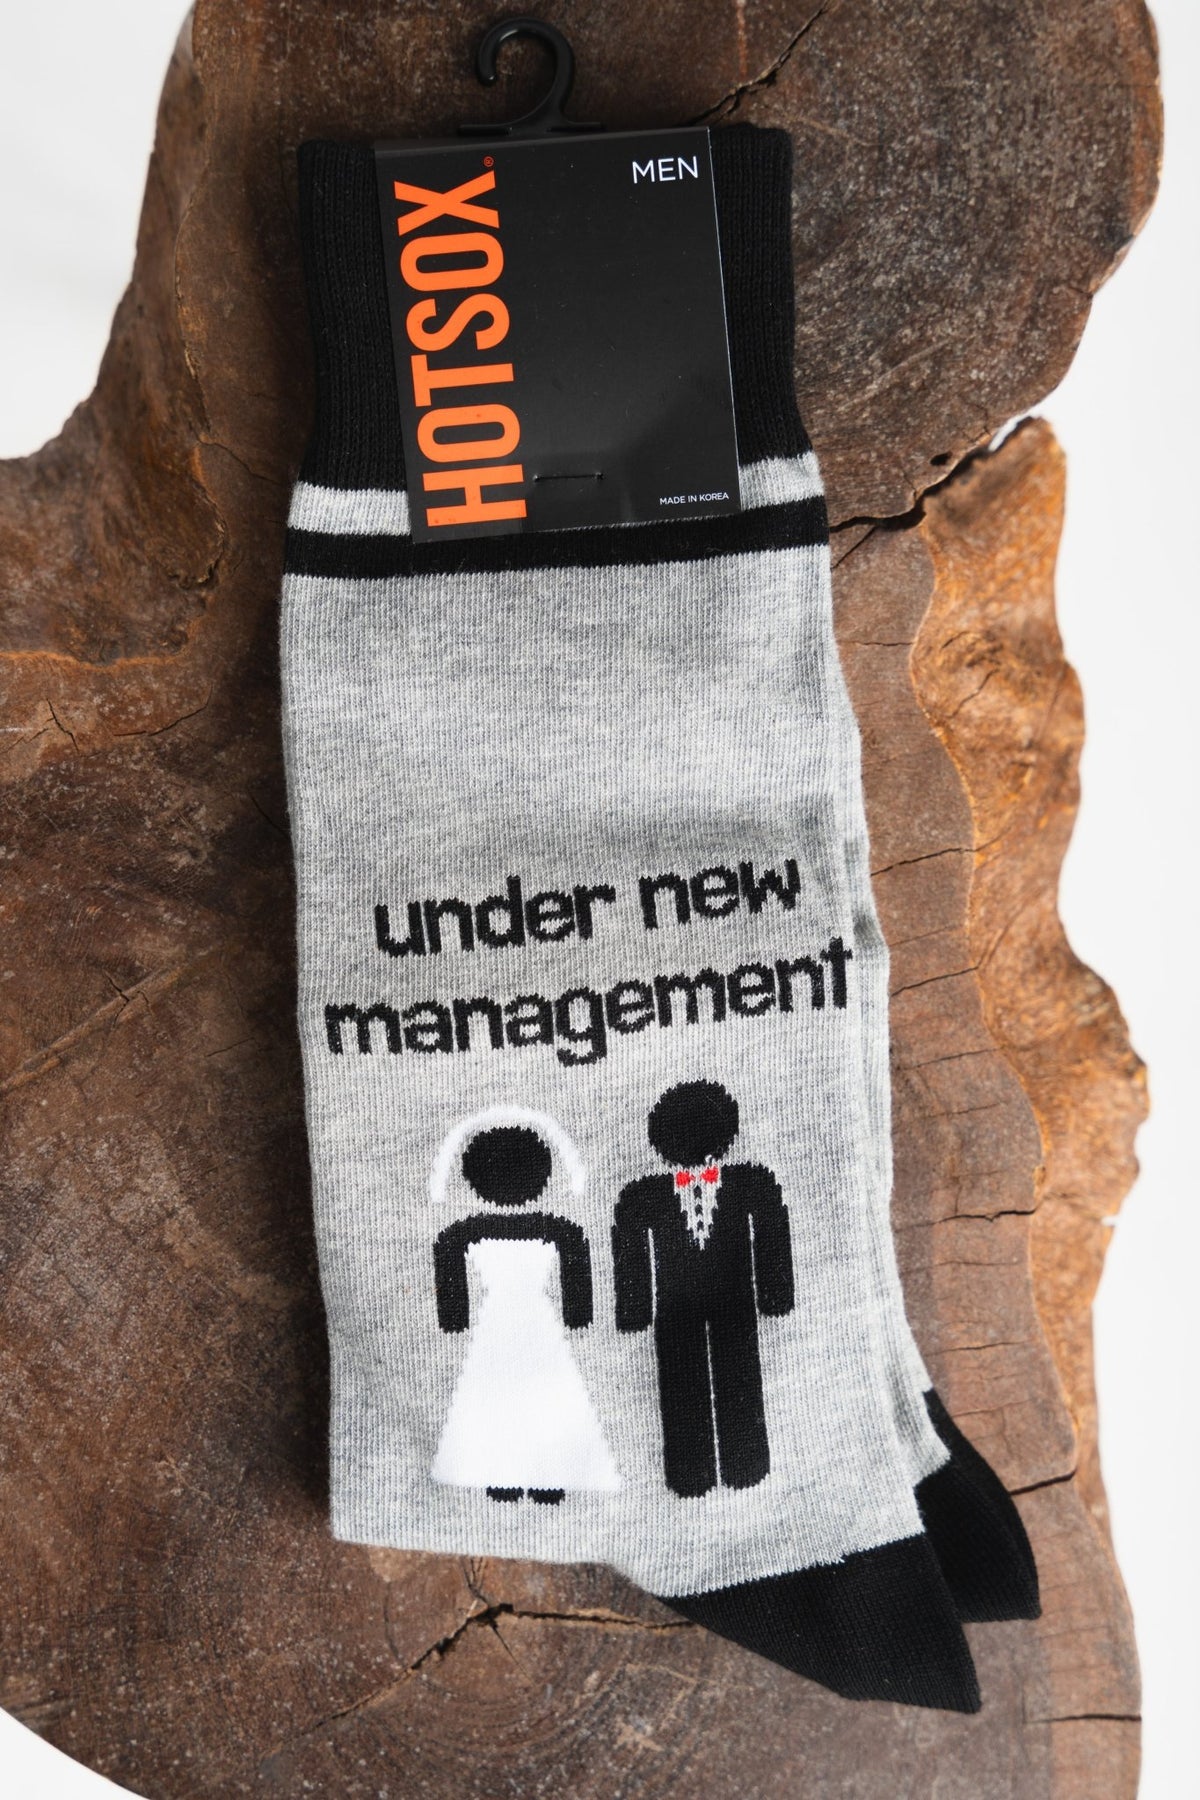 HotSox under new management socks - Trendy Socks at Lush Fashion Lounge Boutique in Oklahoma City